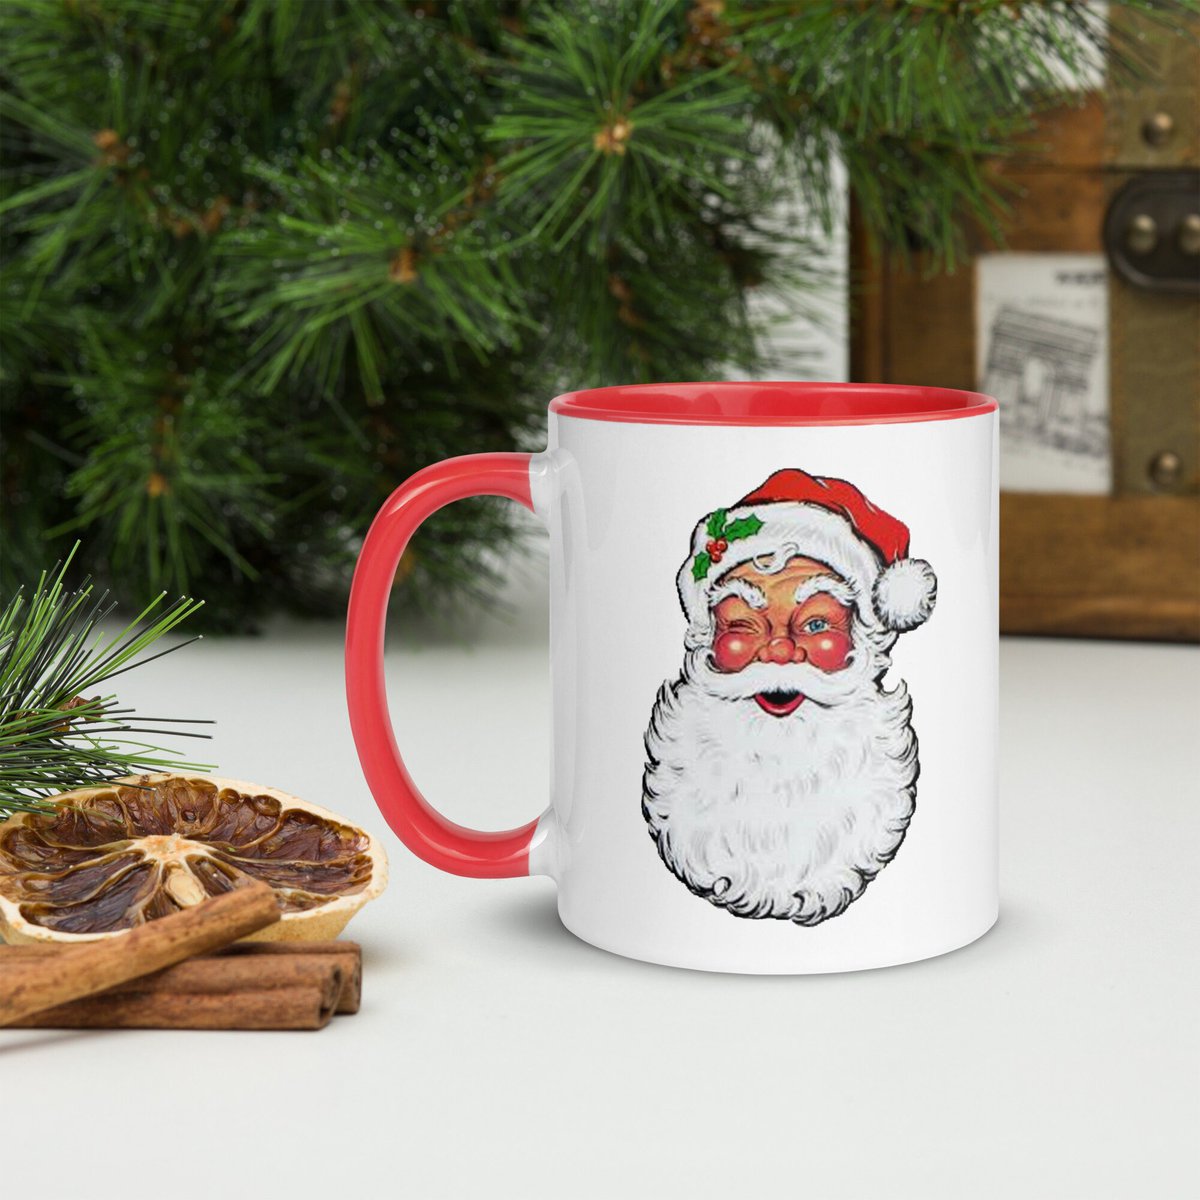 Santa Mug with Color Inside, Christmas Coffee mug, gift ideas, Christmas morning, Holiday mug tuppu.net/c0b68d2b #MothersDay #EtsyShop #FathersDay #Etsy #MemorialDay #HandmadeGifts #FourthofJuly #ColorMug